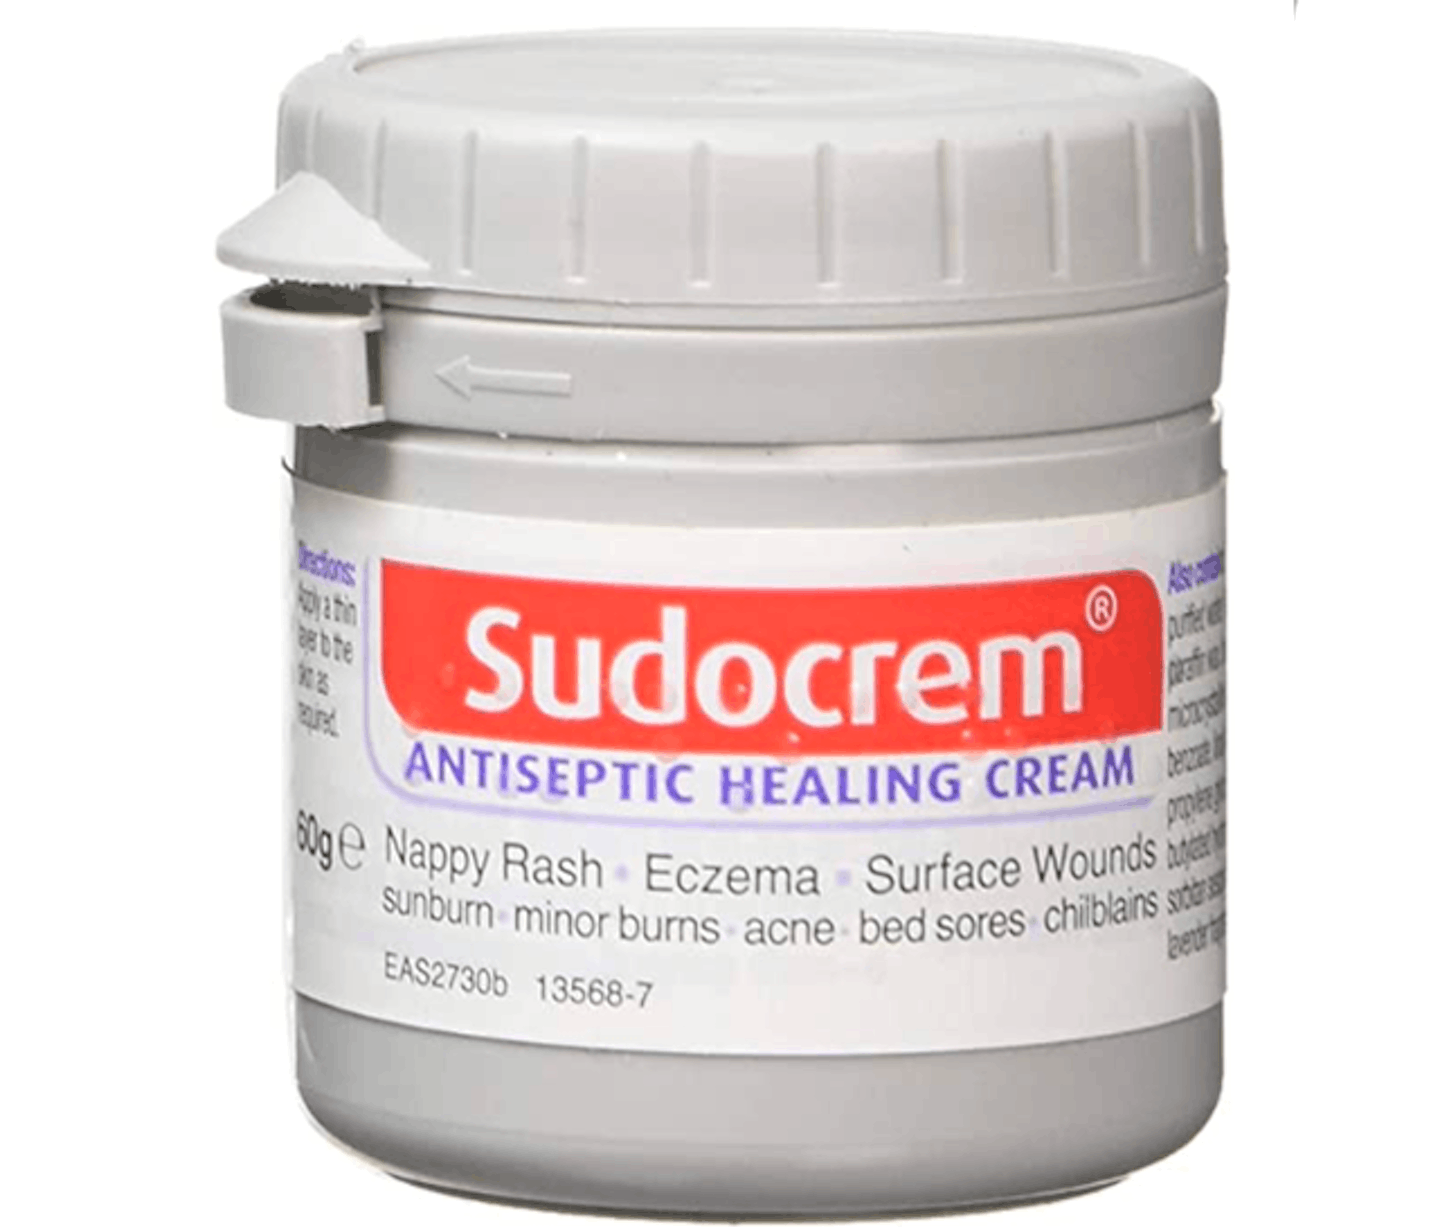 17 brilliant Sudocrem uses